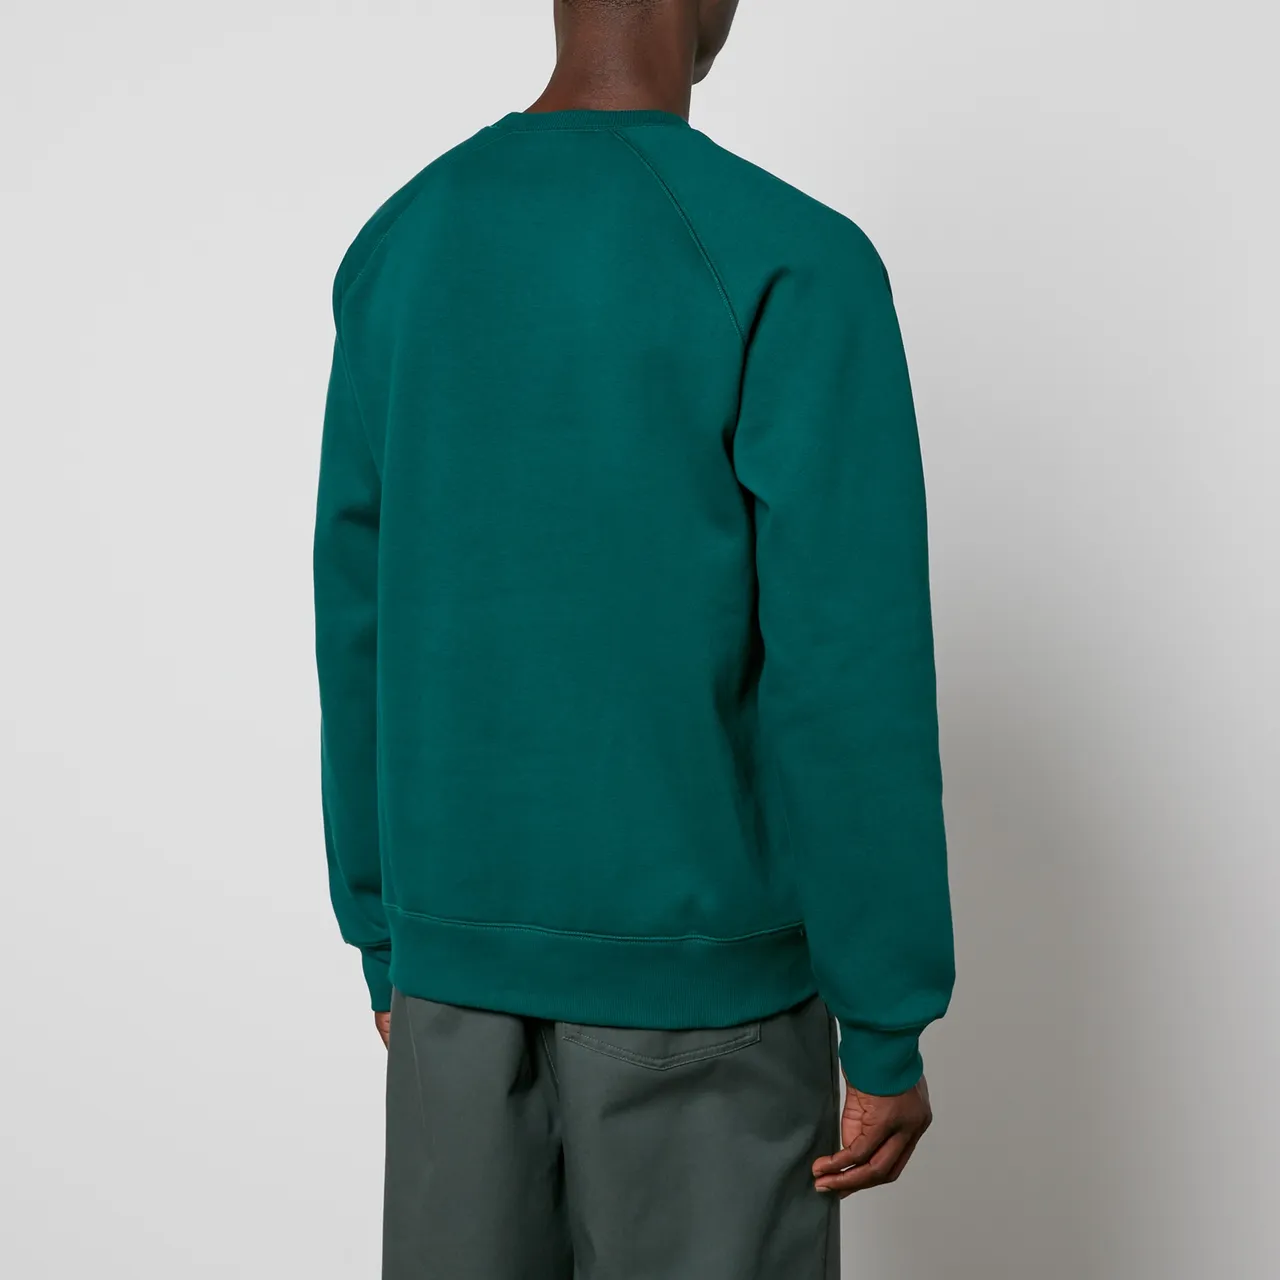 Carhartt WIP Chase Cotton-Blend Sweatshirt